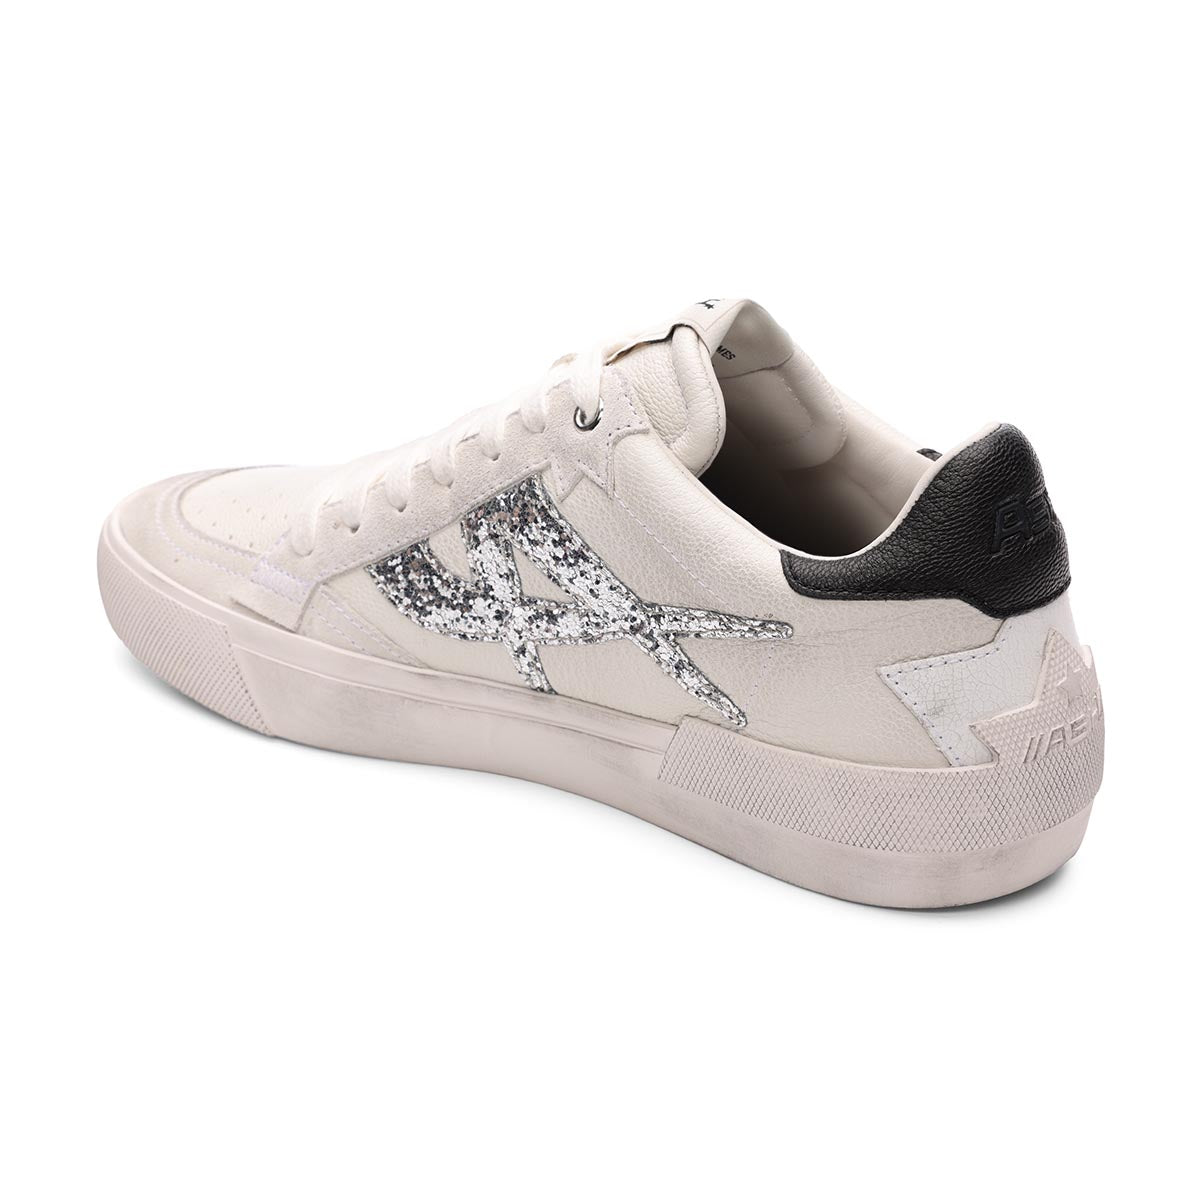 Moonlight Vintage Glitter Sneaker - Off-White/Silver - Side Profile View - ASH